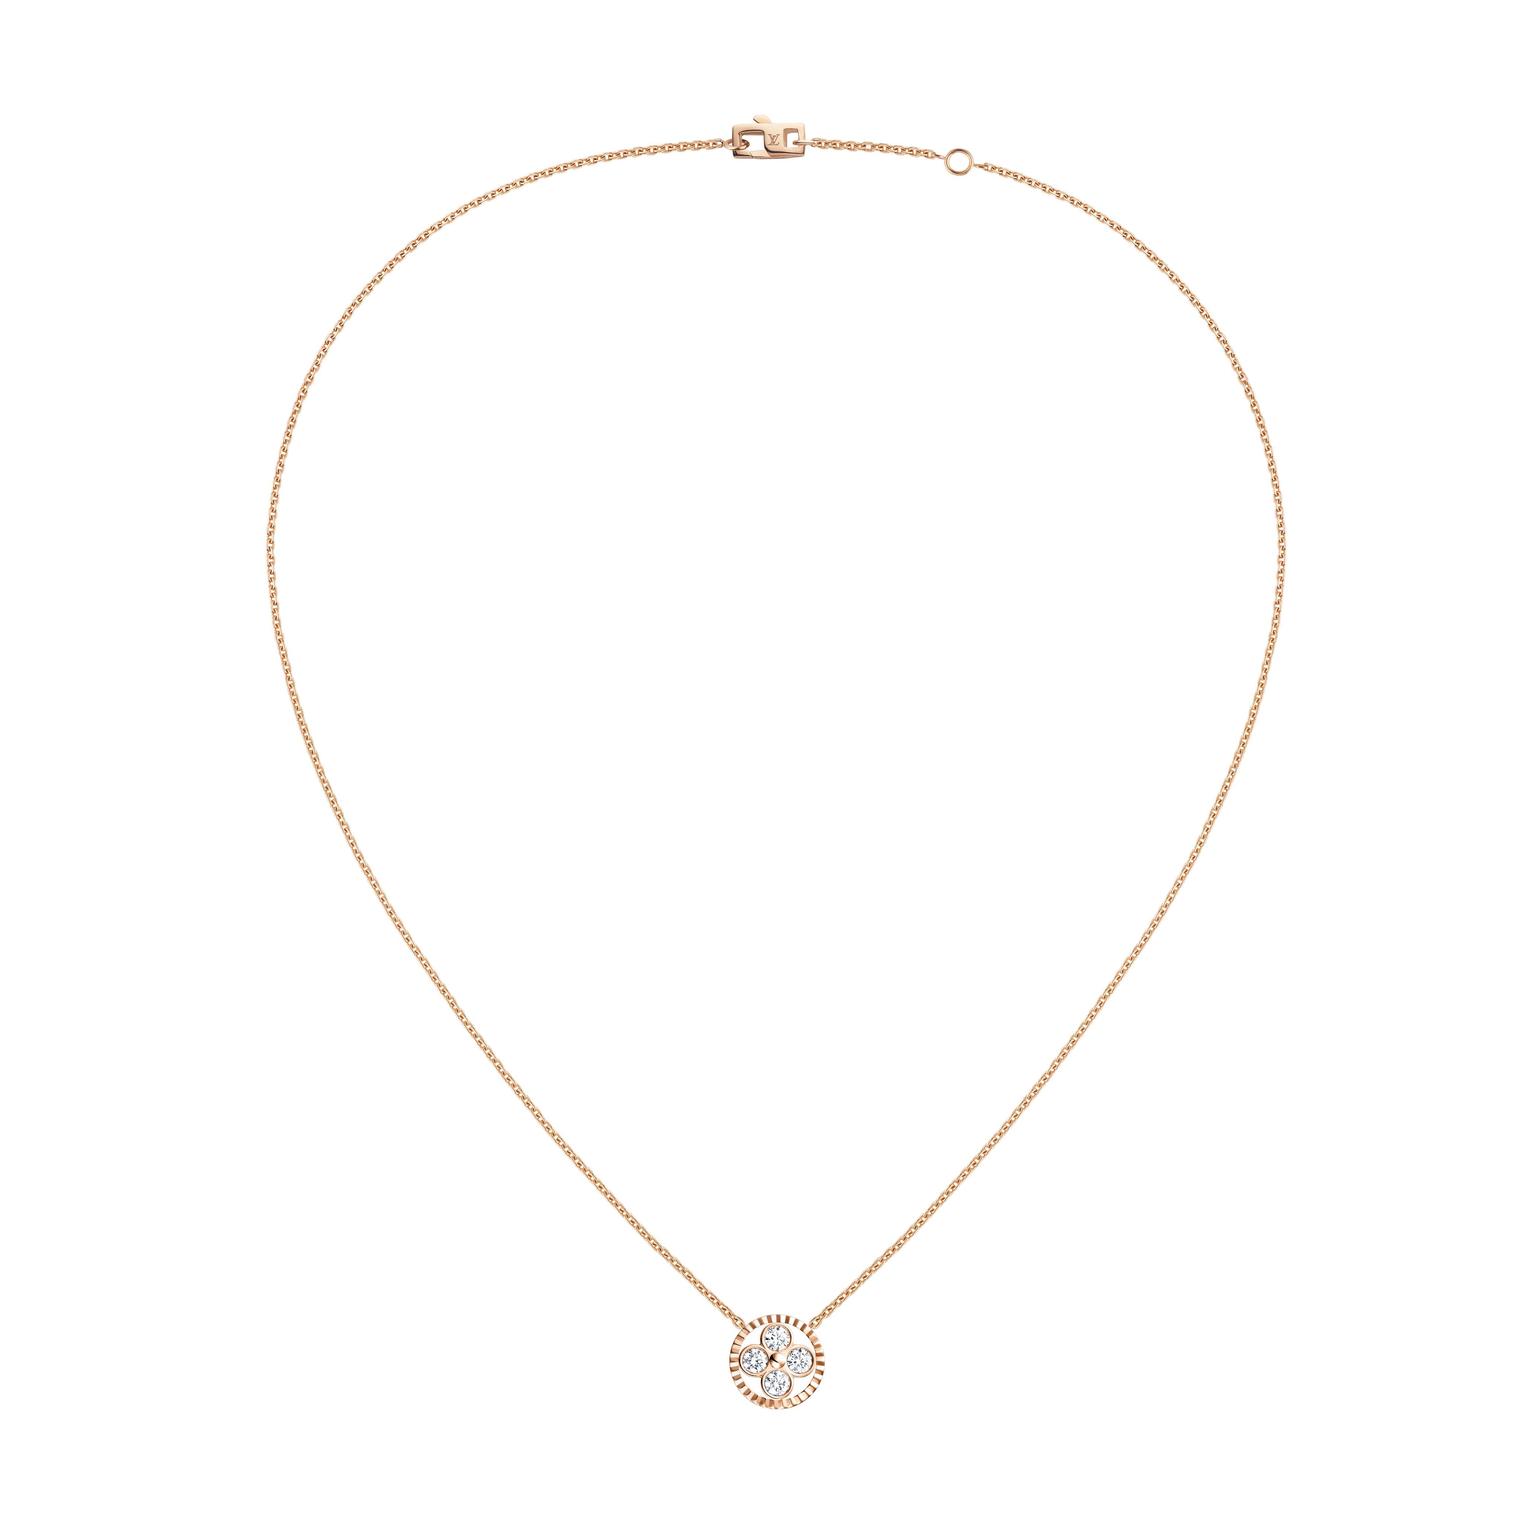 Louis Vuitton Monogram Sun pendant necklace in rose gold with diamonds.